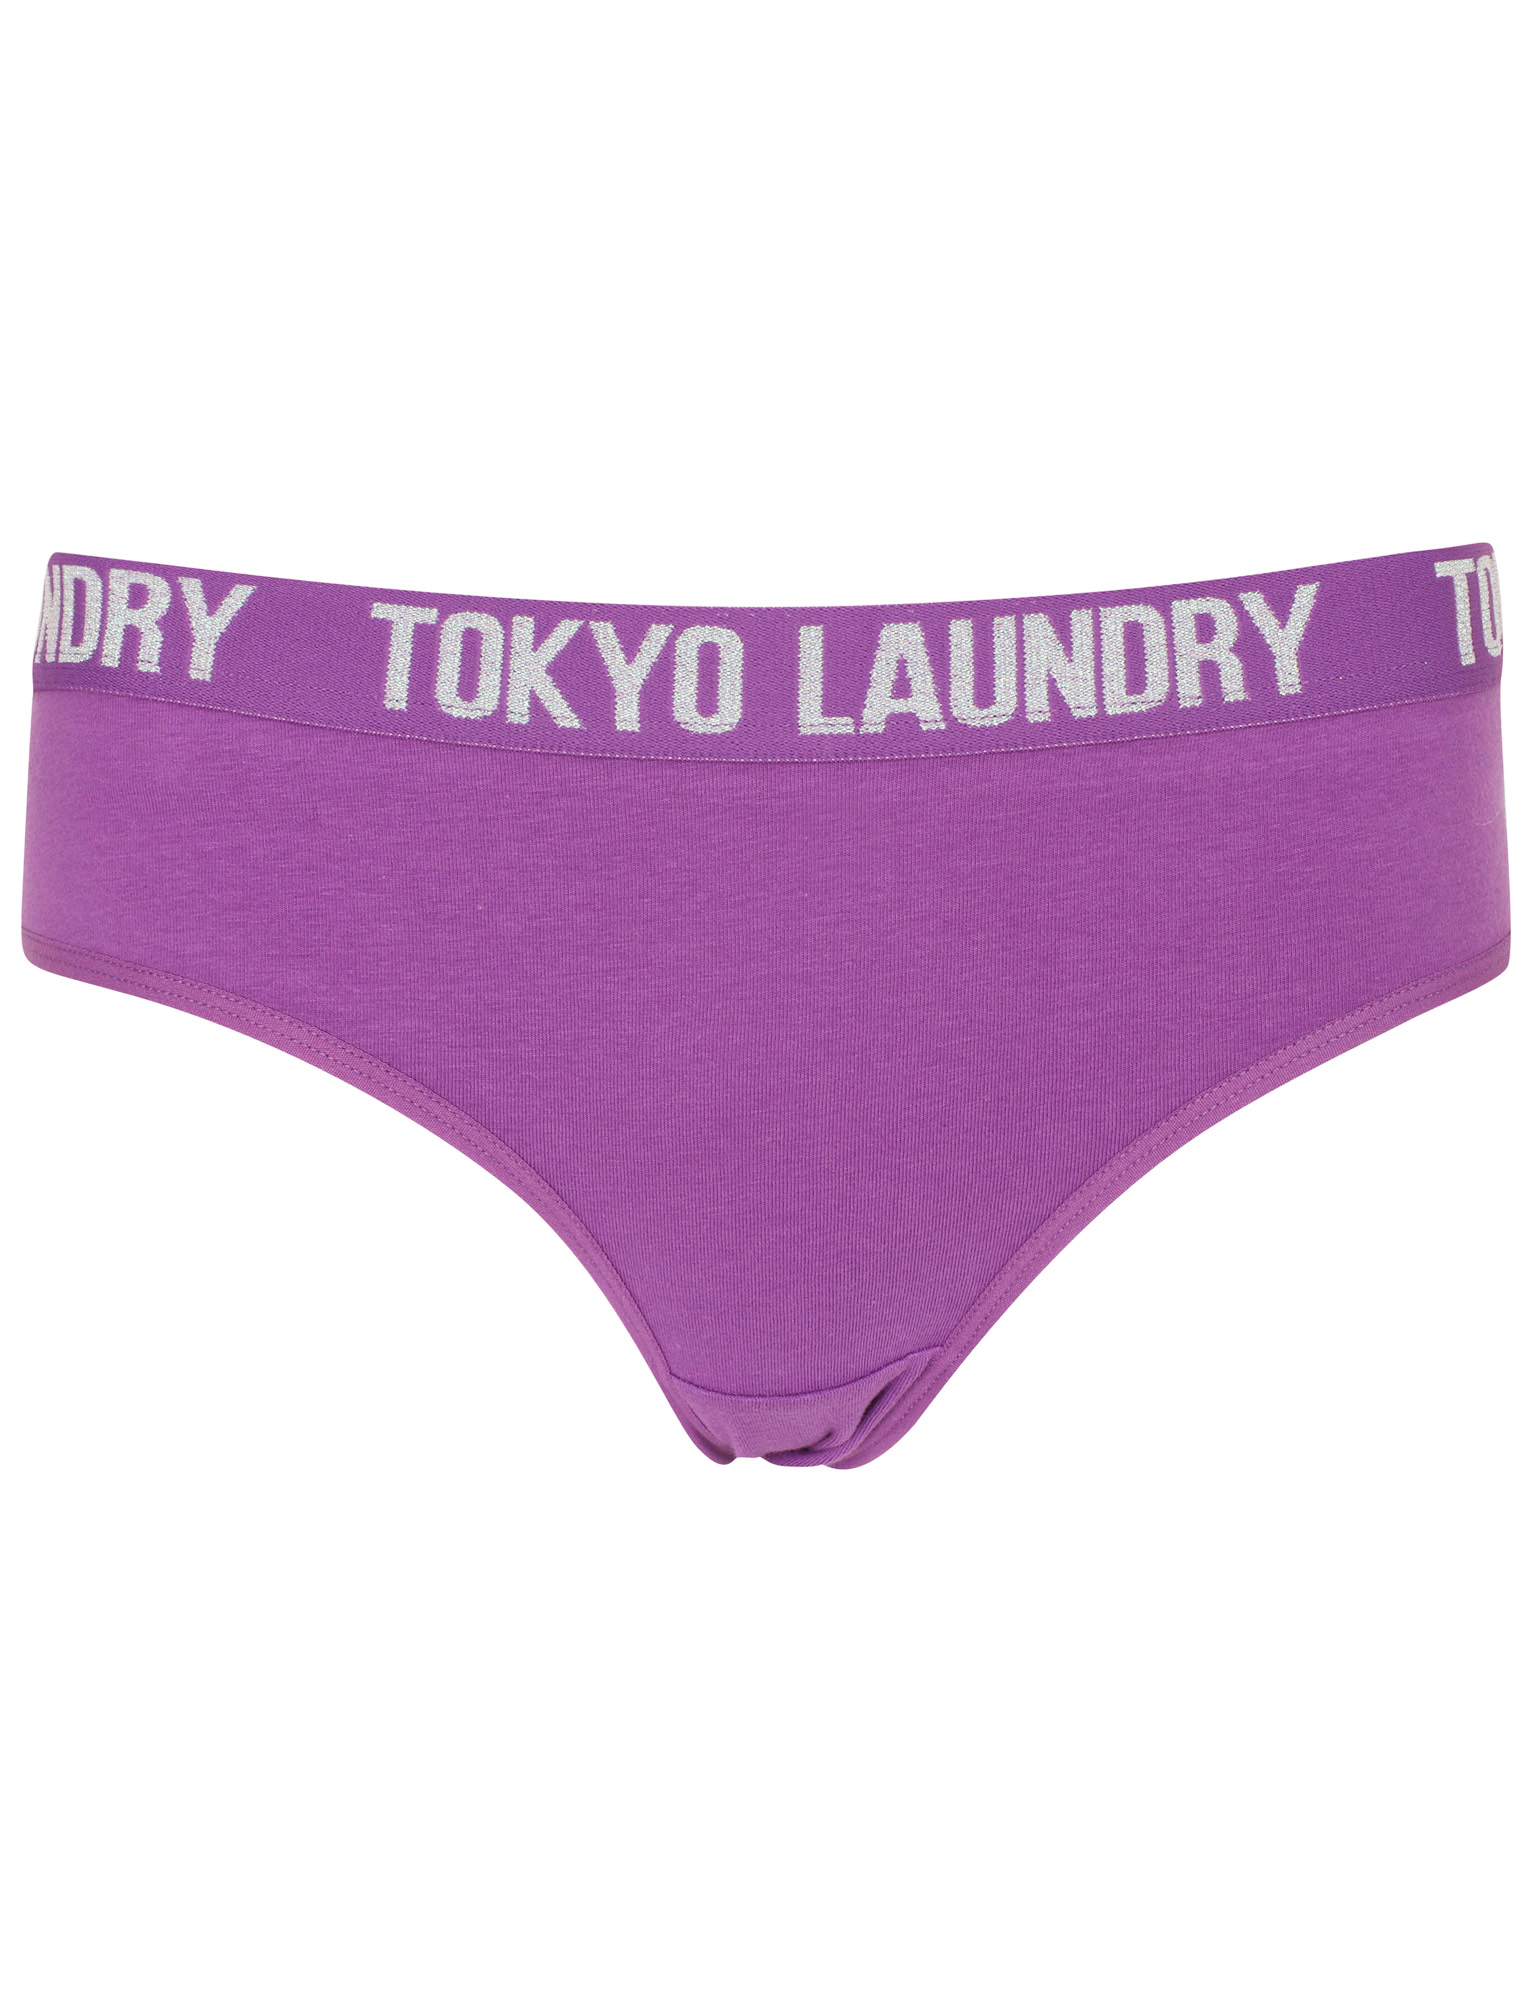 Tokyo Laundry Women's 5 Pack Briefs Knickers Underwear Boxers ...